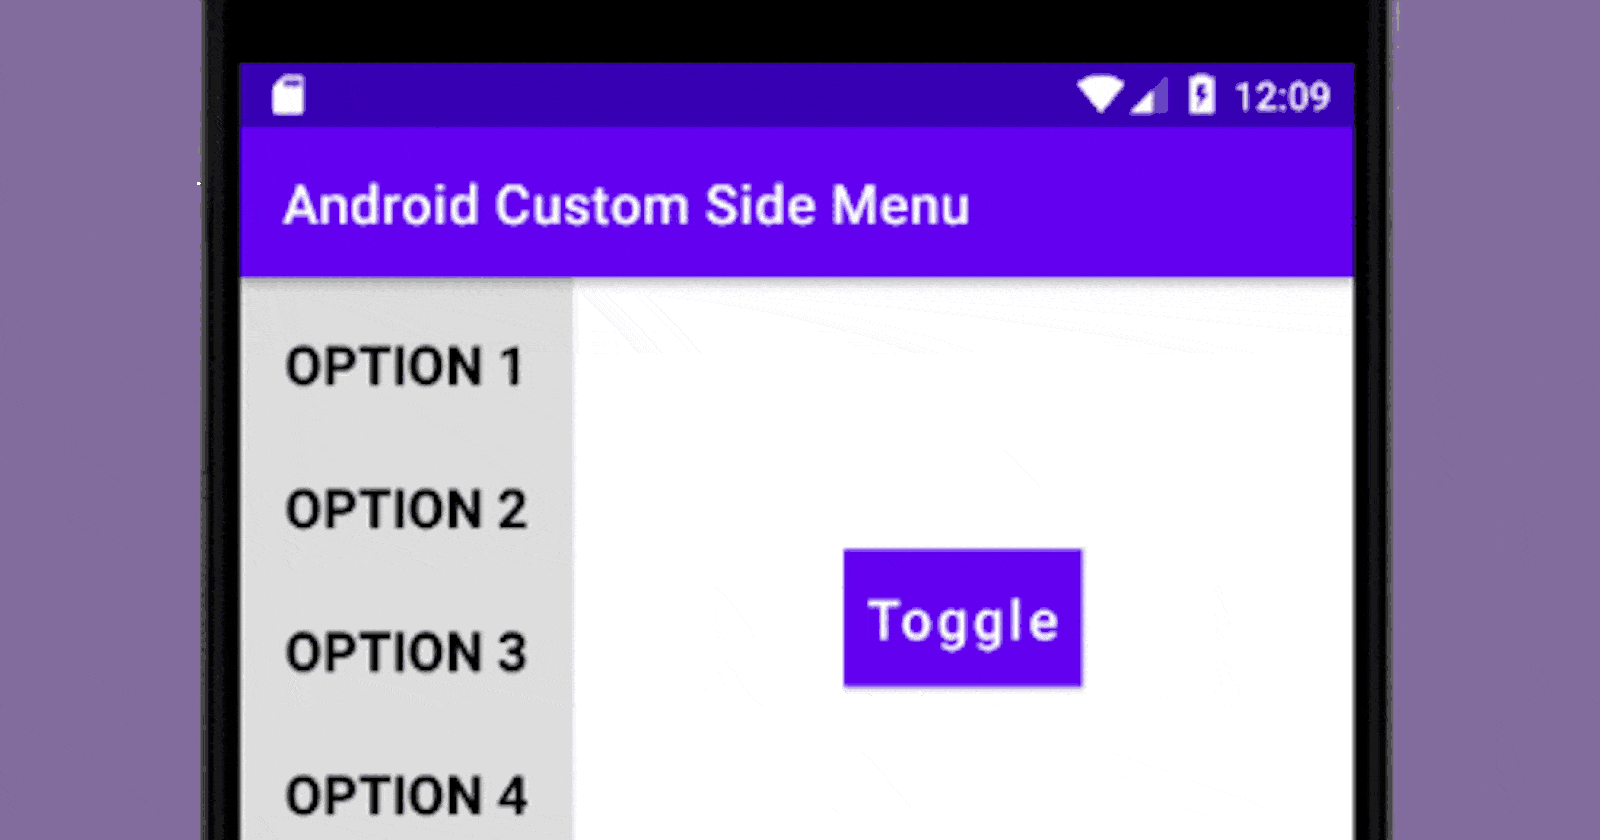 Android Custom Side Menu 2-Navigation Drawer Alternative -> using Fragment